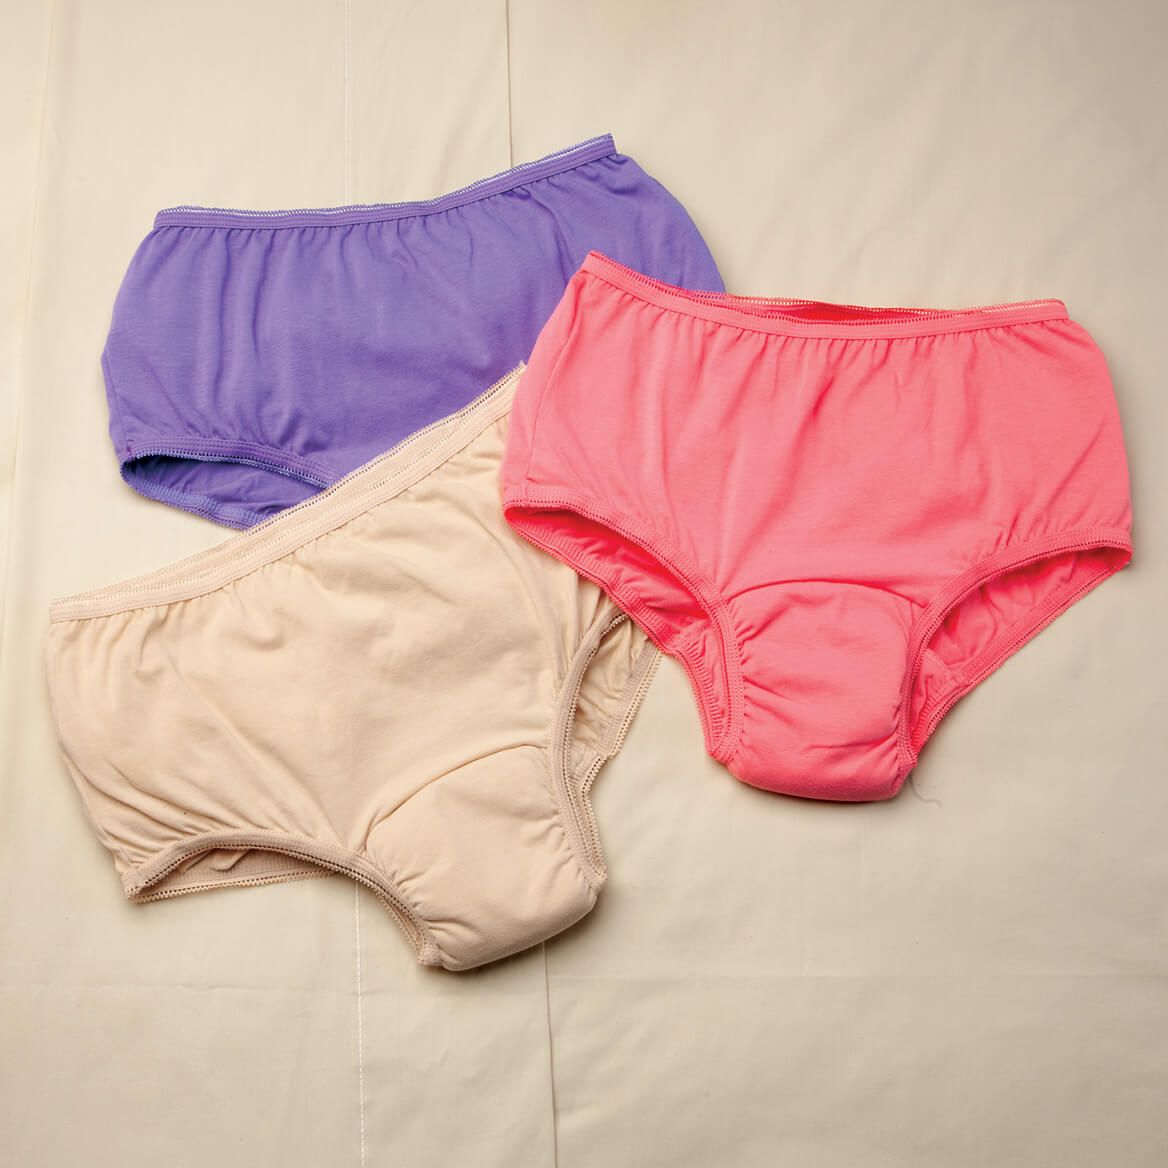 20 Pieces Women's Disposable Underwear For Travel Colorful Cotton